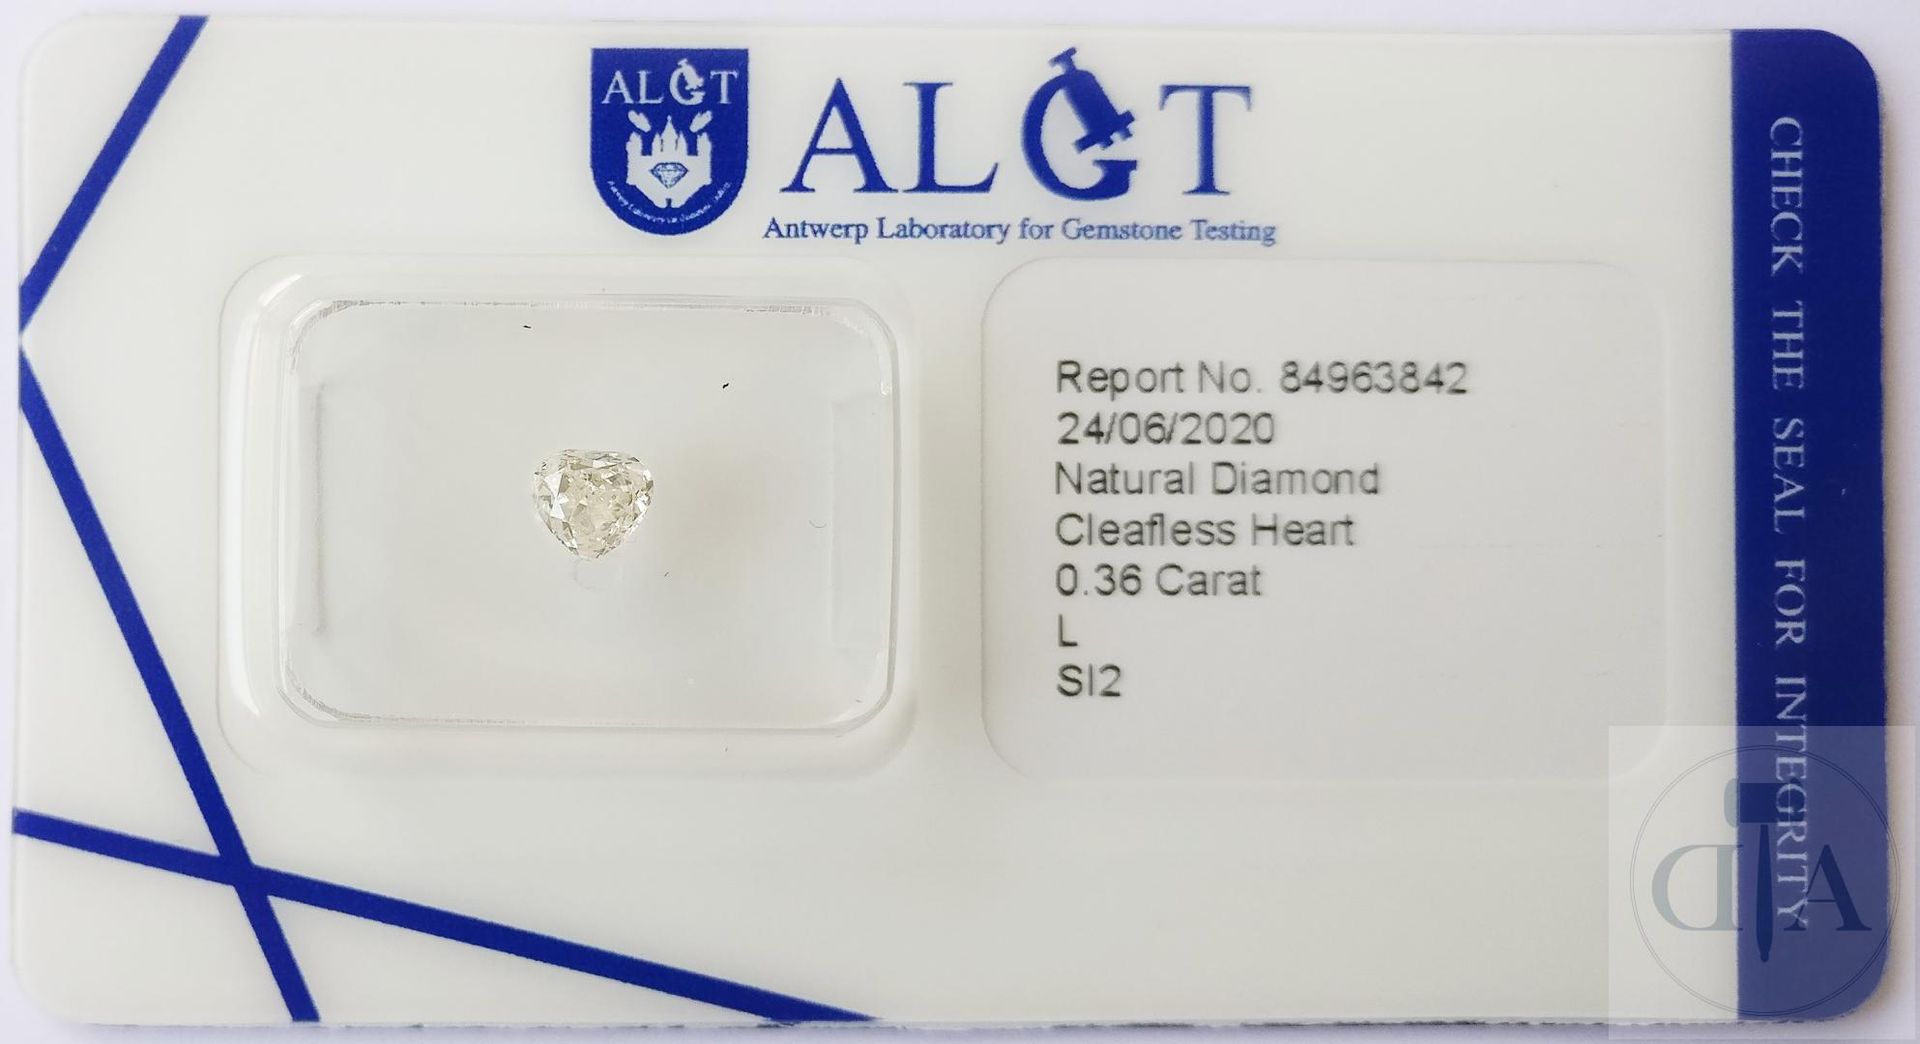 Null "0.36 克拉 ALGT 认证钻石- ALGT 证书编号：84963842 
- 形状：心形心形
- 克拉重量： 0.36 克拉 
- 颜色： L &hellip;